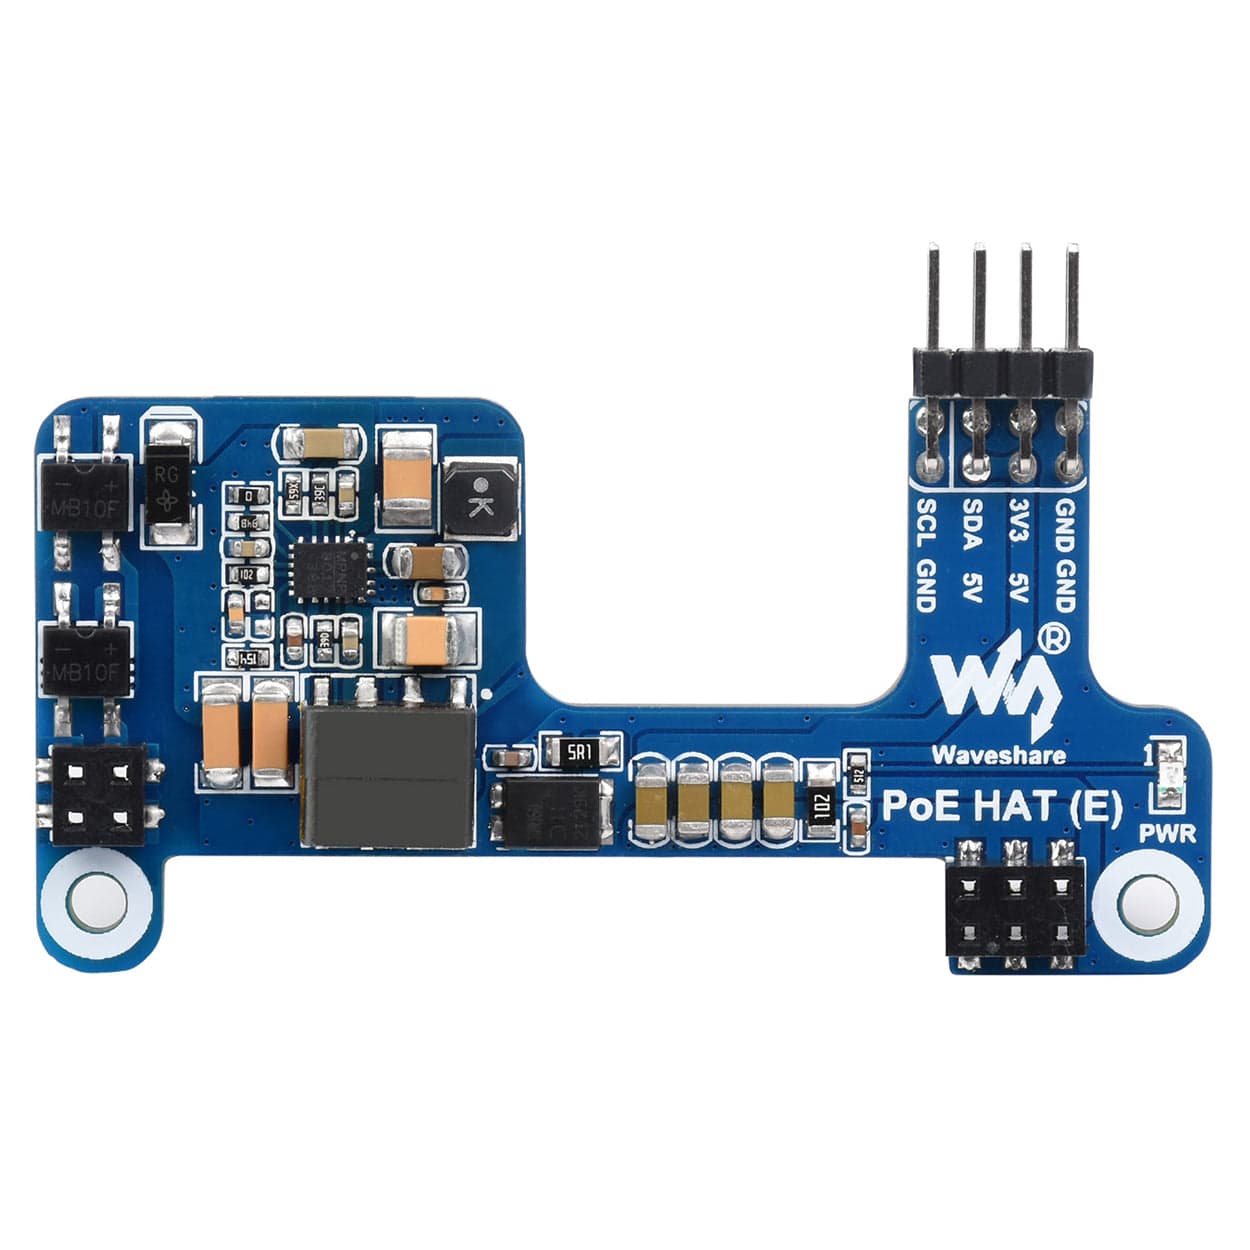 Power over Ethernet HAT (E) for Raspberry Pi - The Pi Hut